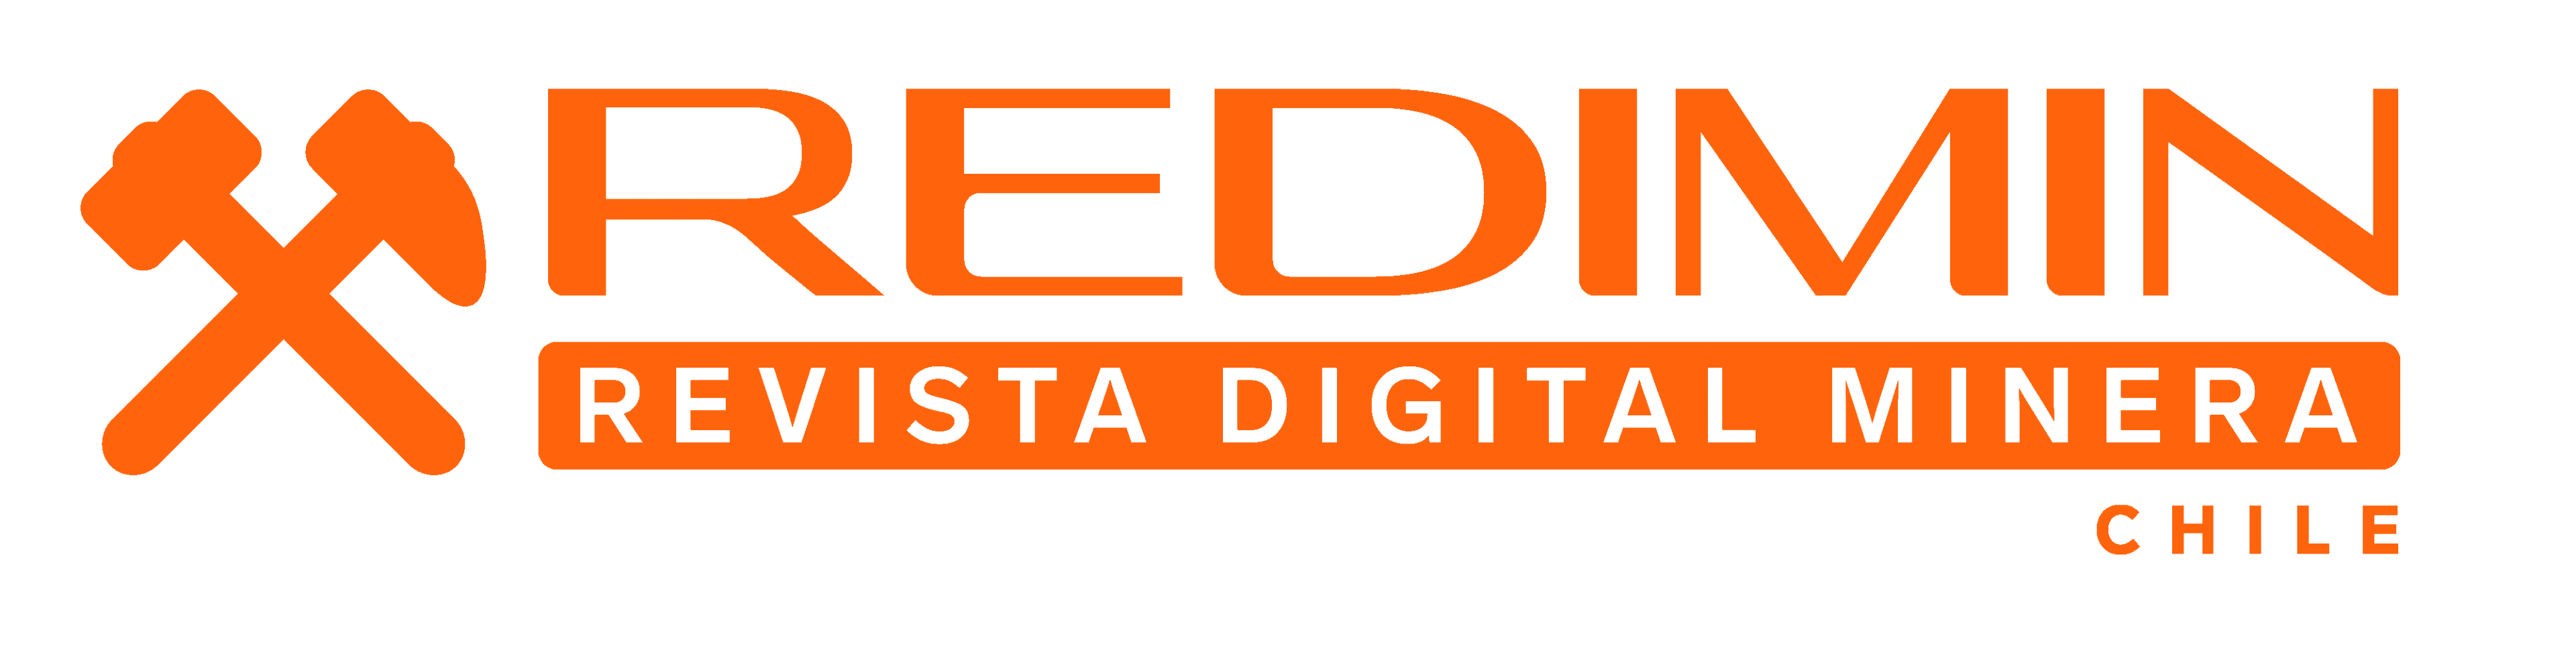 Revista Digital Minera REDIMIN | La Revista Minera de Chile